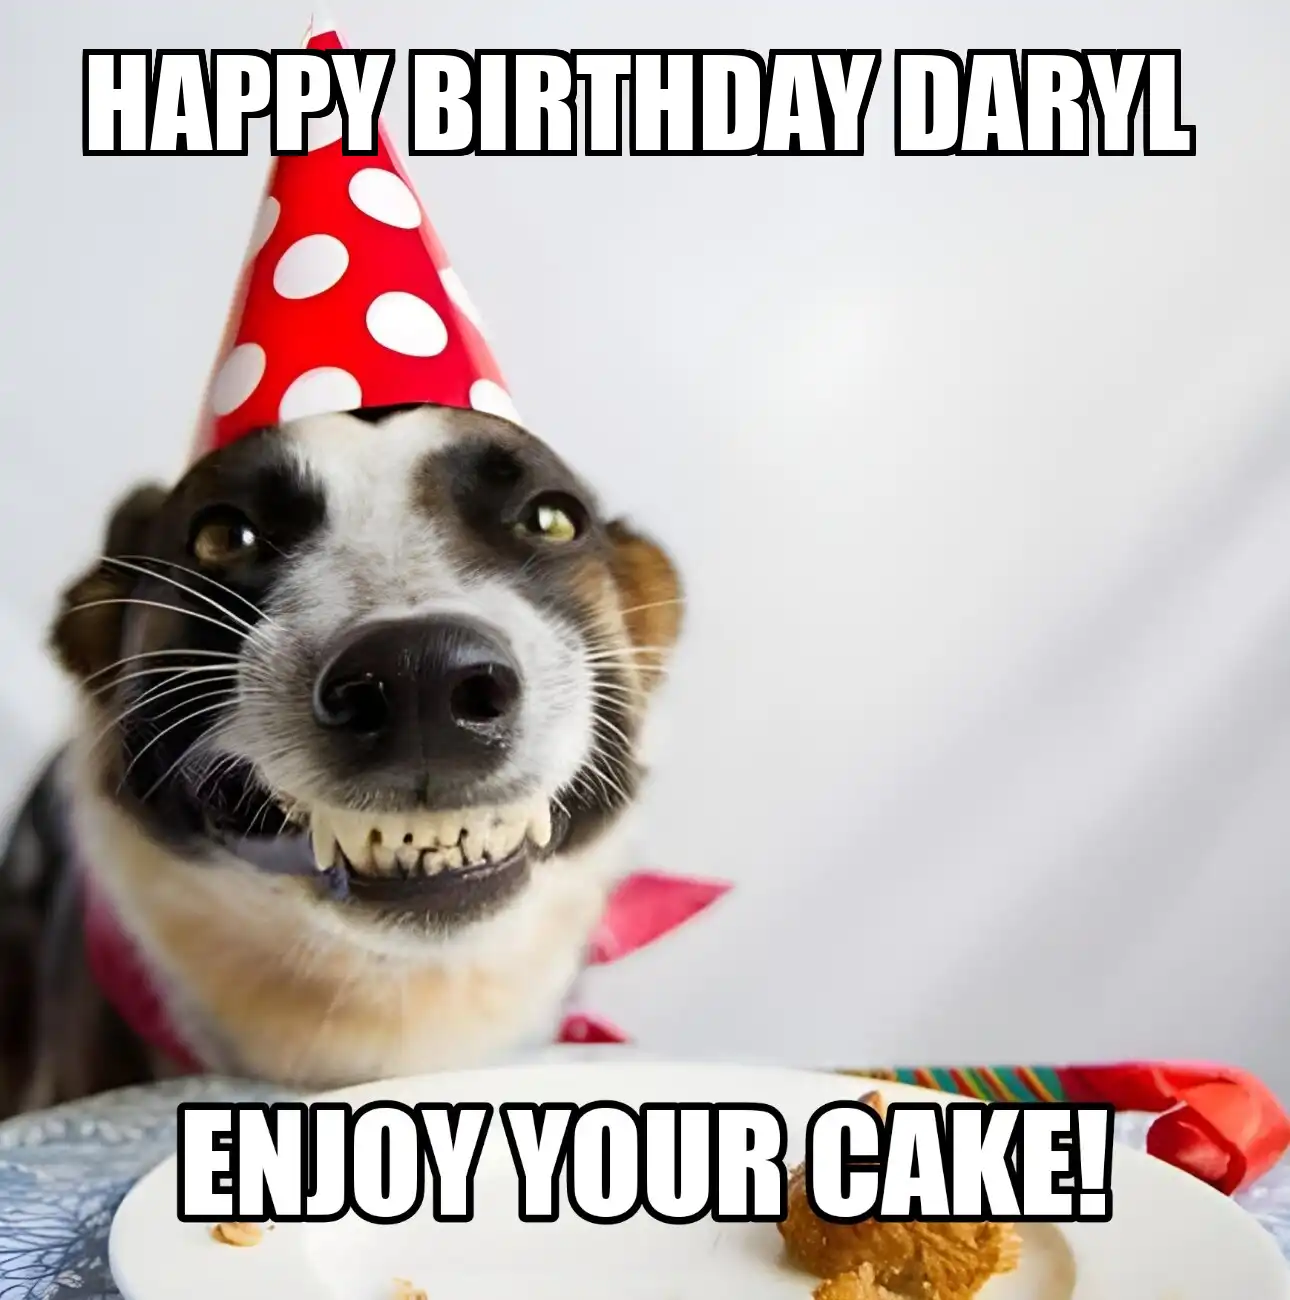 Happy Birthday Daryl Enjoy Your Cake Dog Meme